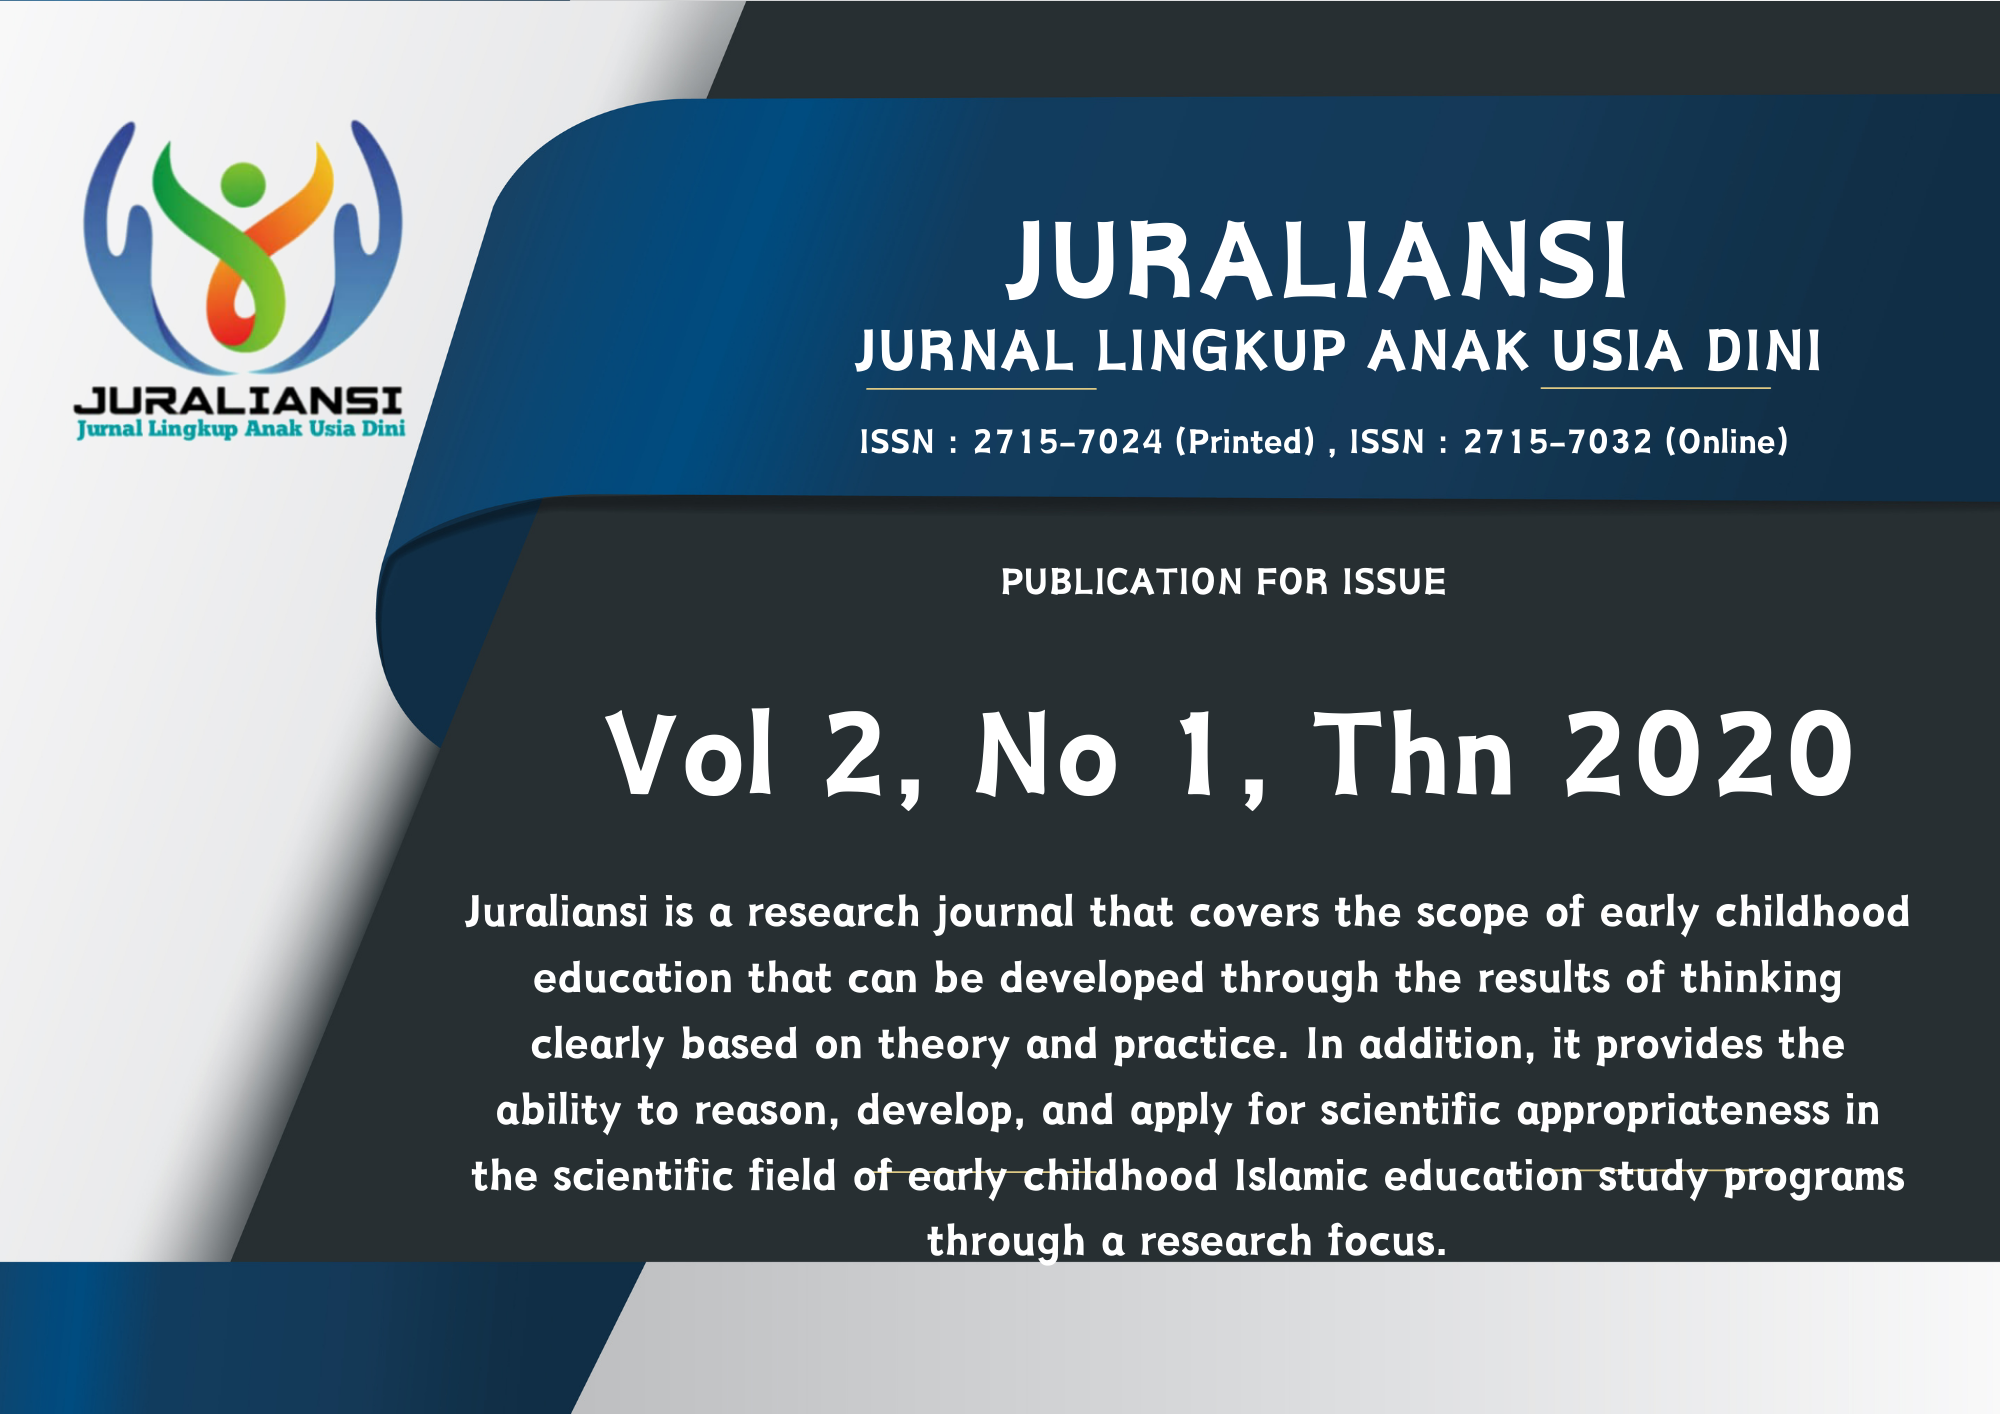 					View Vol. 2 No. 1 (2020): JURALIANSI (JURNAL LINGKUP ANAK USIA DINI)
				